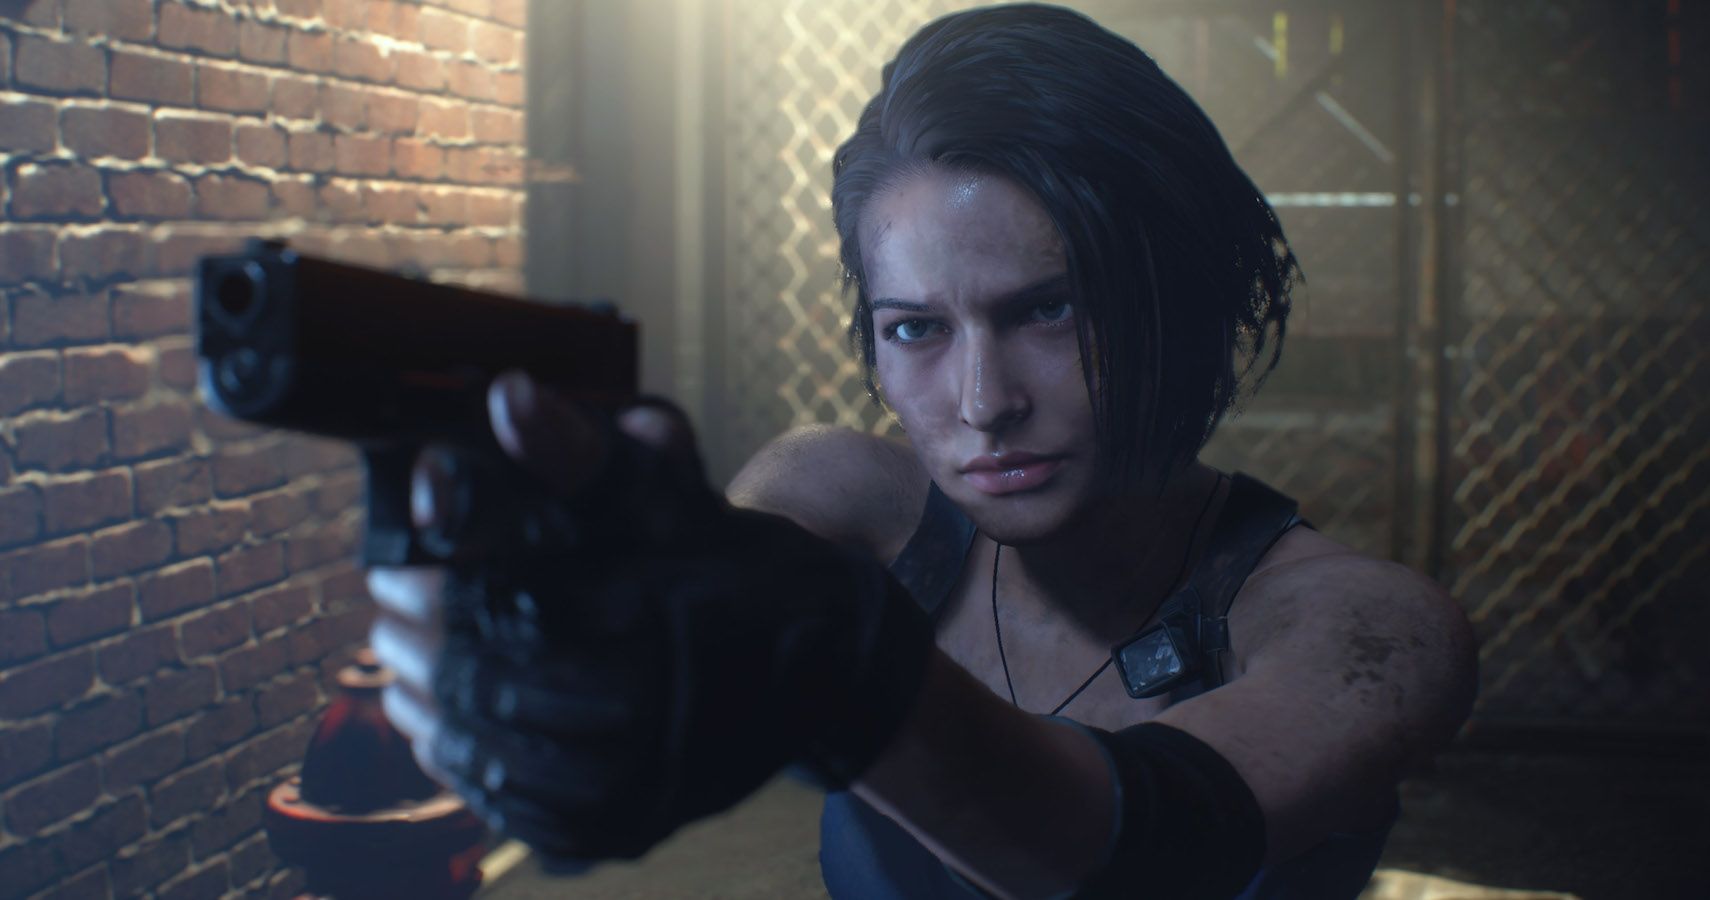 Jill Resident Evil 3 holding a pistol